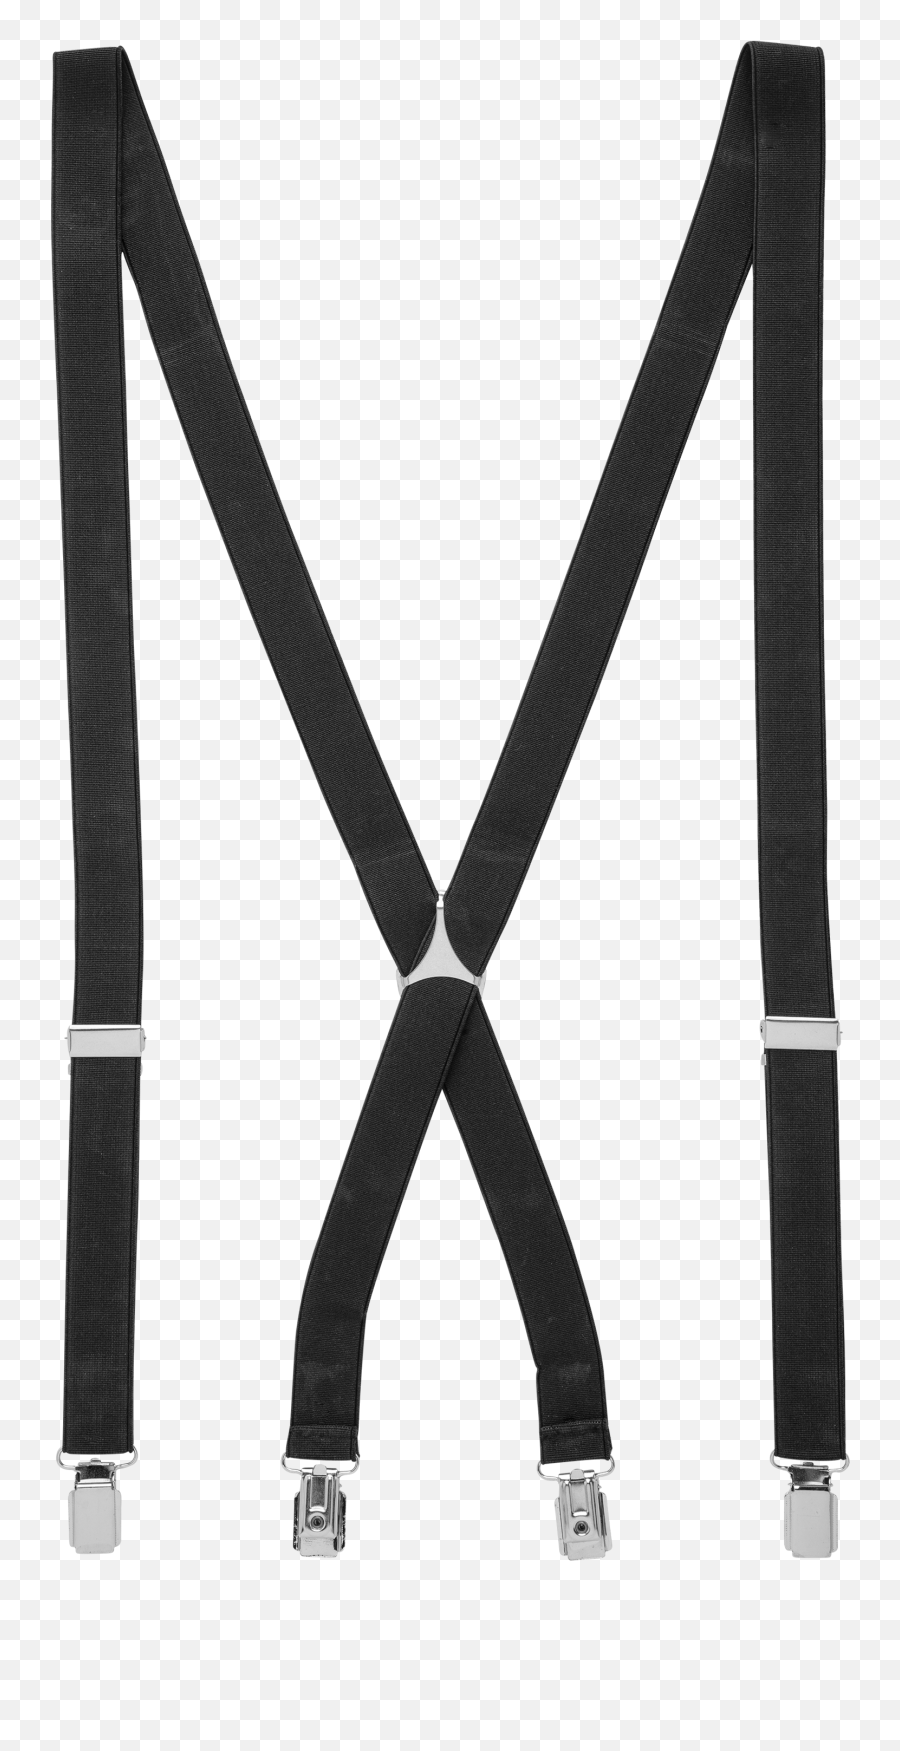 Download Hd Tarocash Plain Suspenders - Black Suspenders Png,Suspenders Png